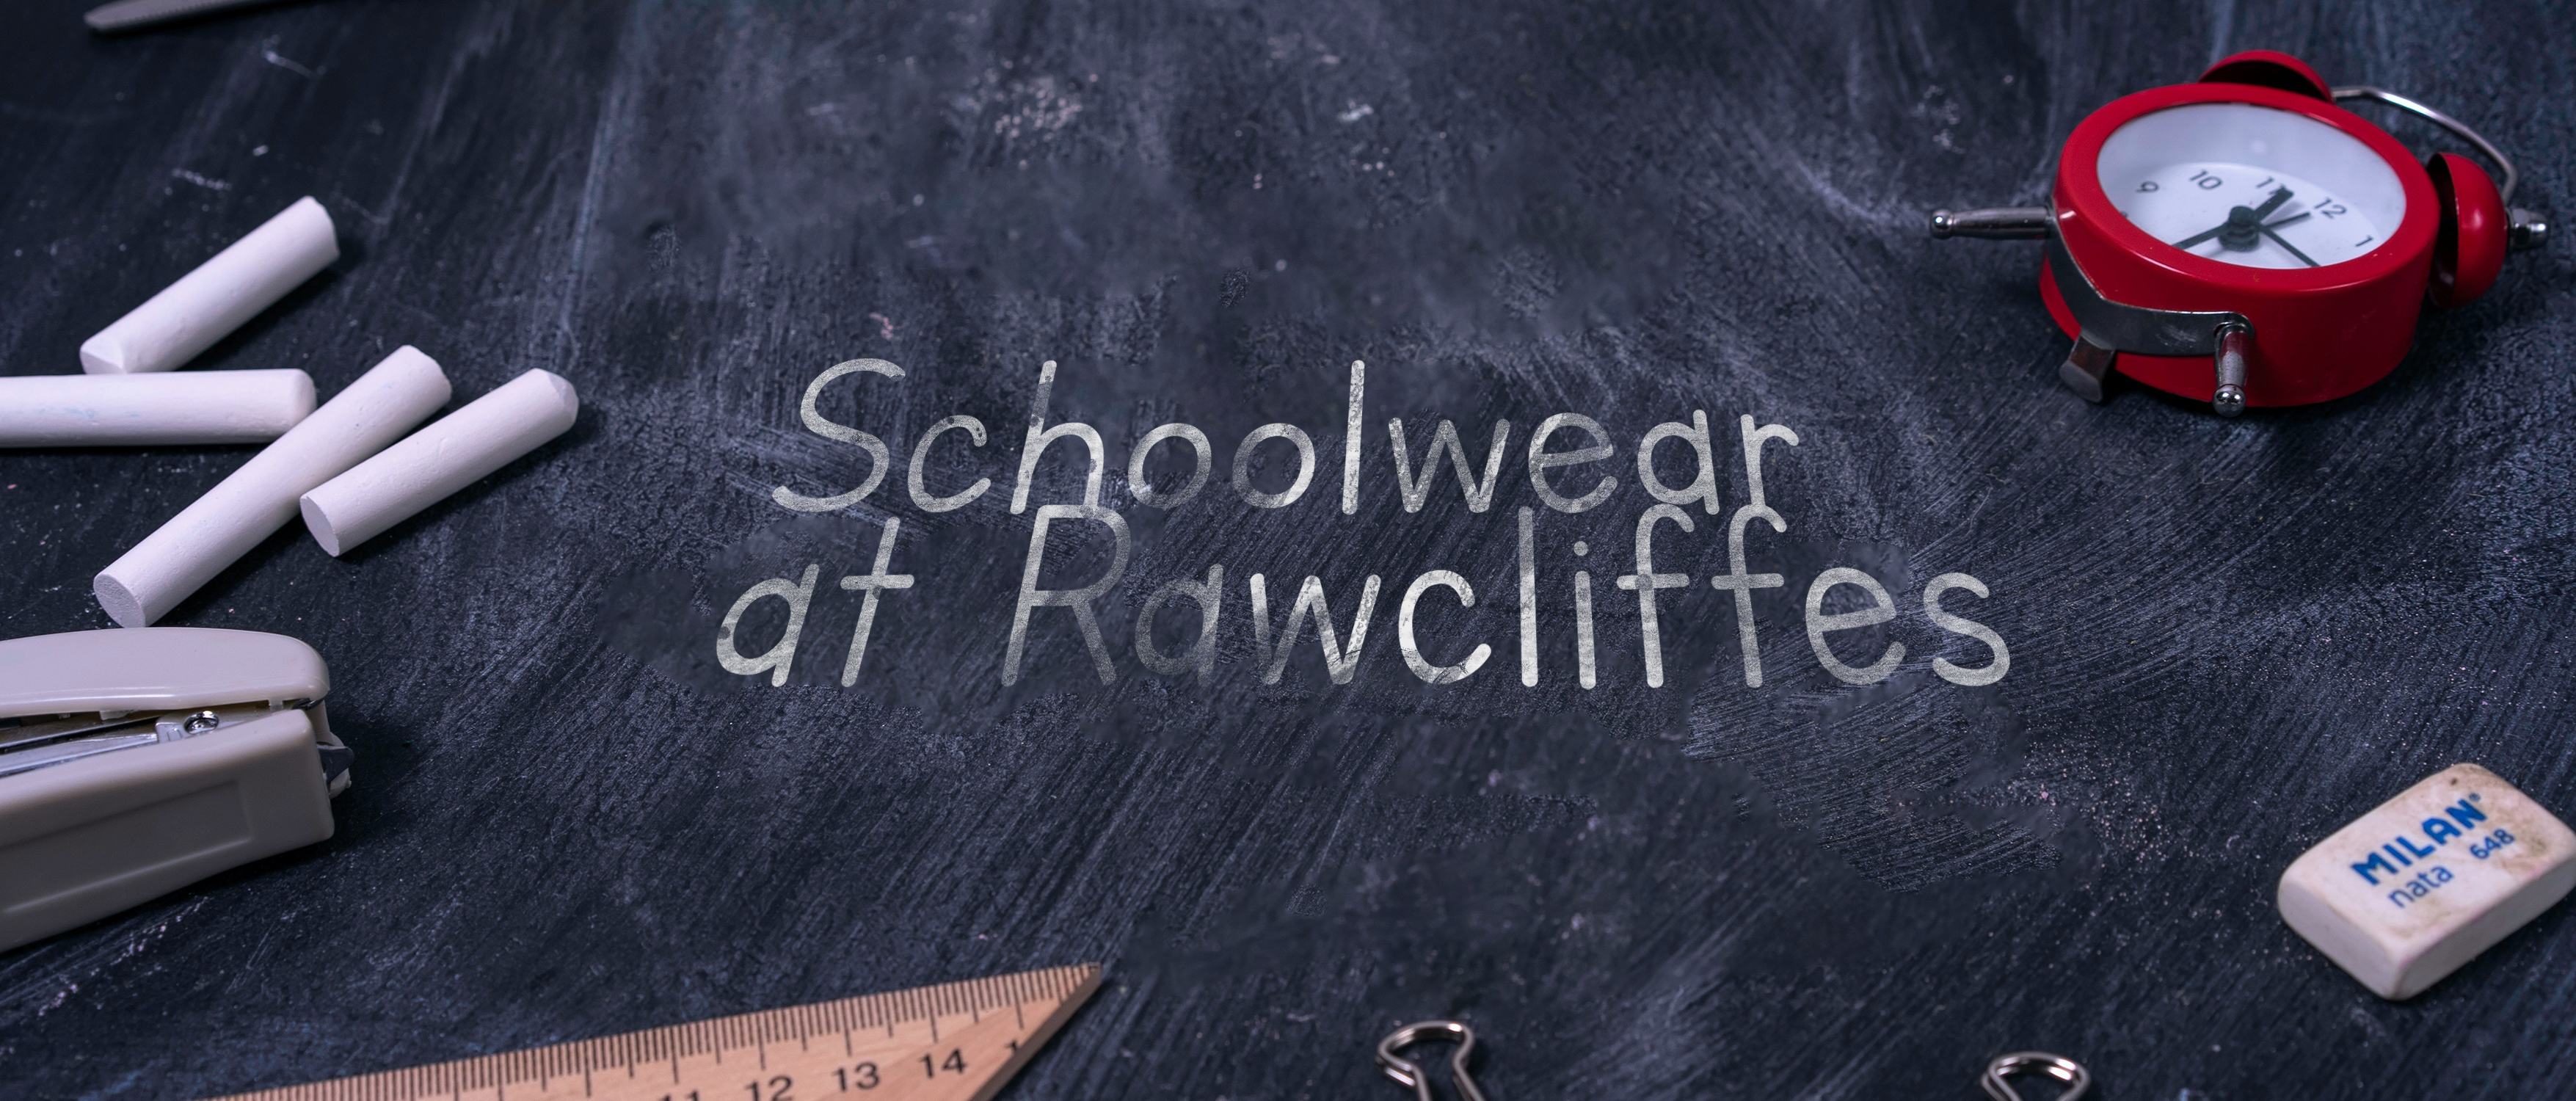 School wear at Rawcliffes